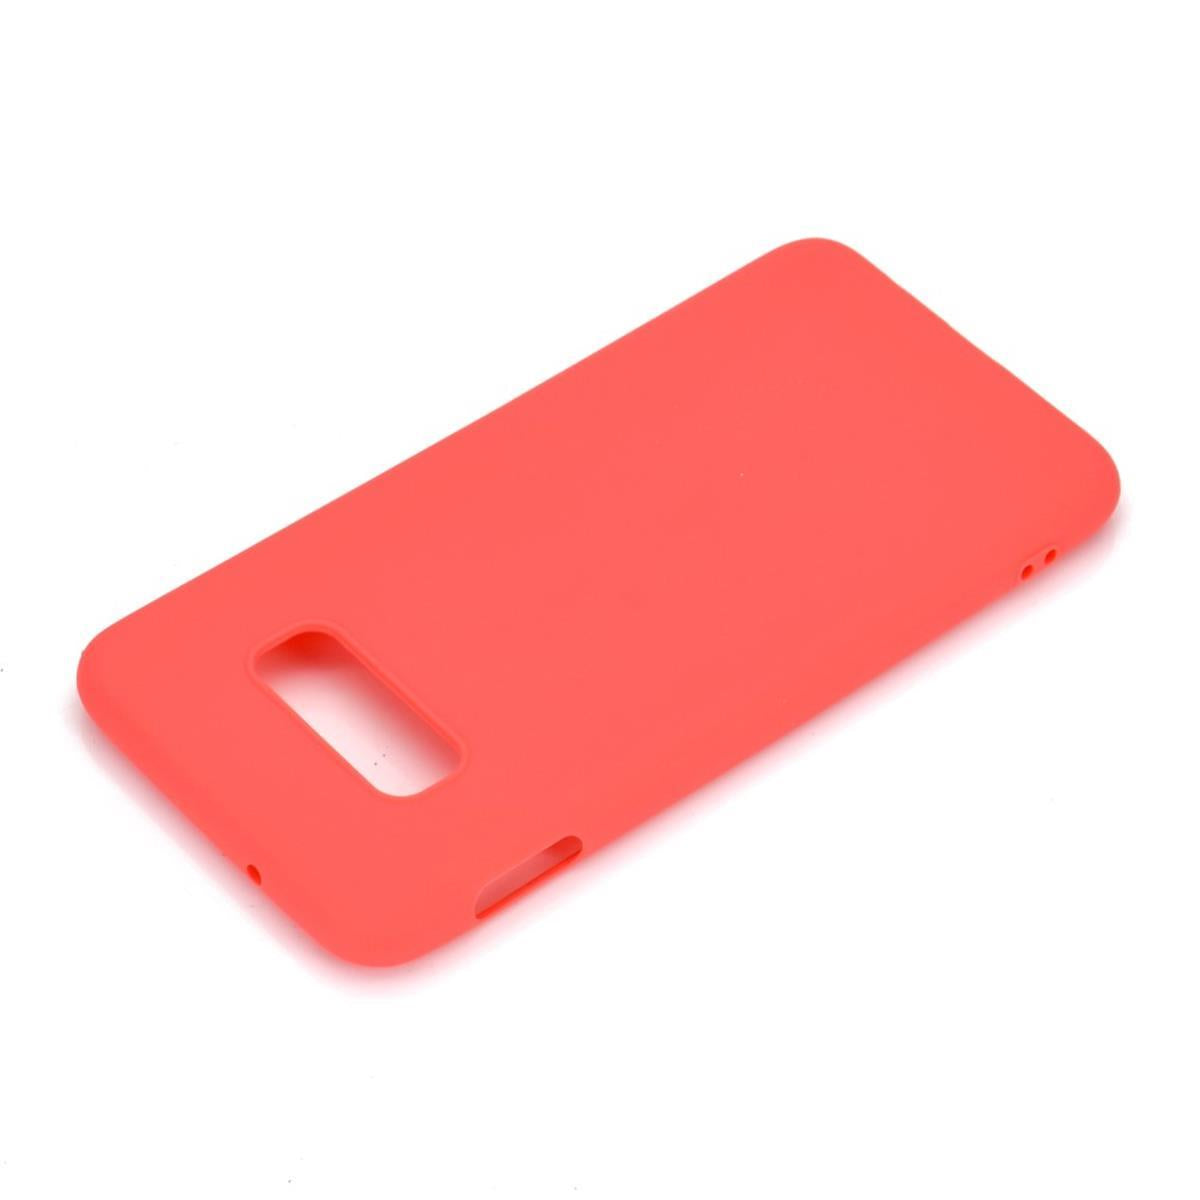 Hülle für Samsung Galaxy S10e Handyhülle Silikon Case Schutzhülle matt Rot